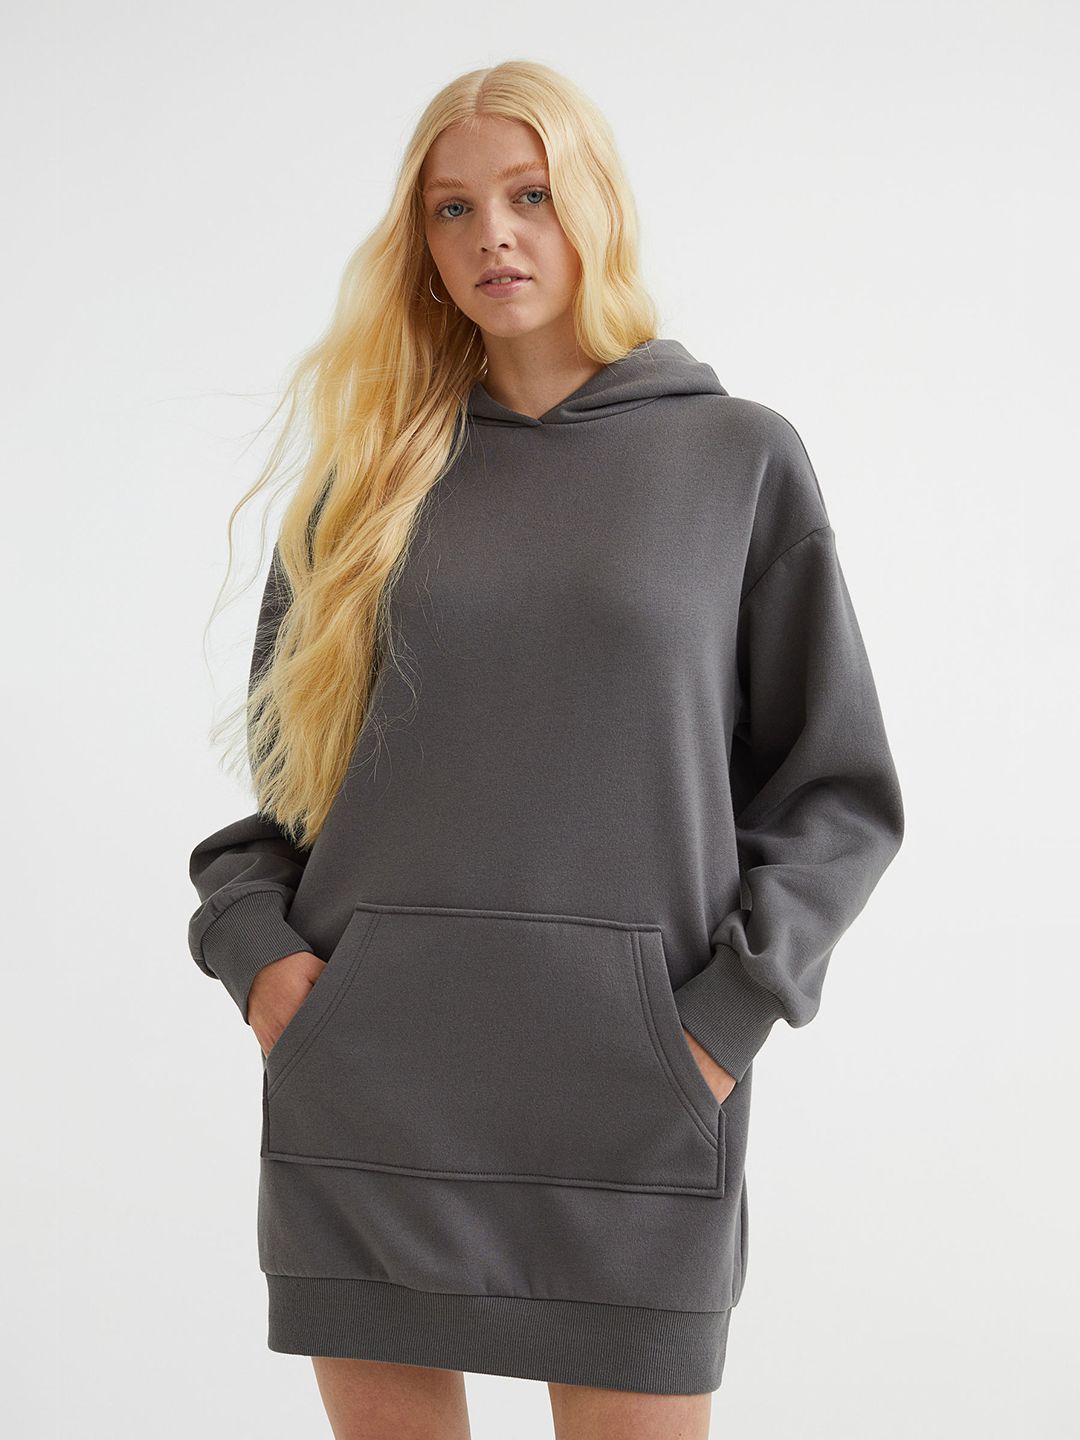 H&M Woman Hooded sweatshirt dress Price in India